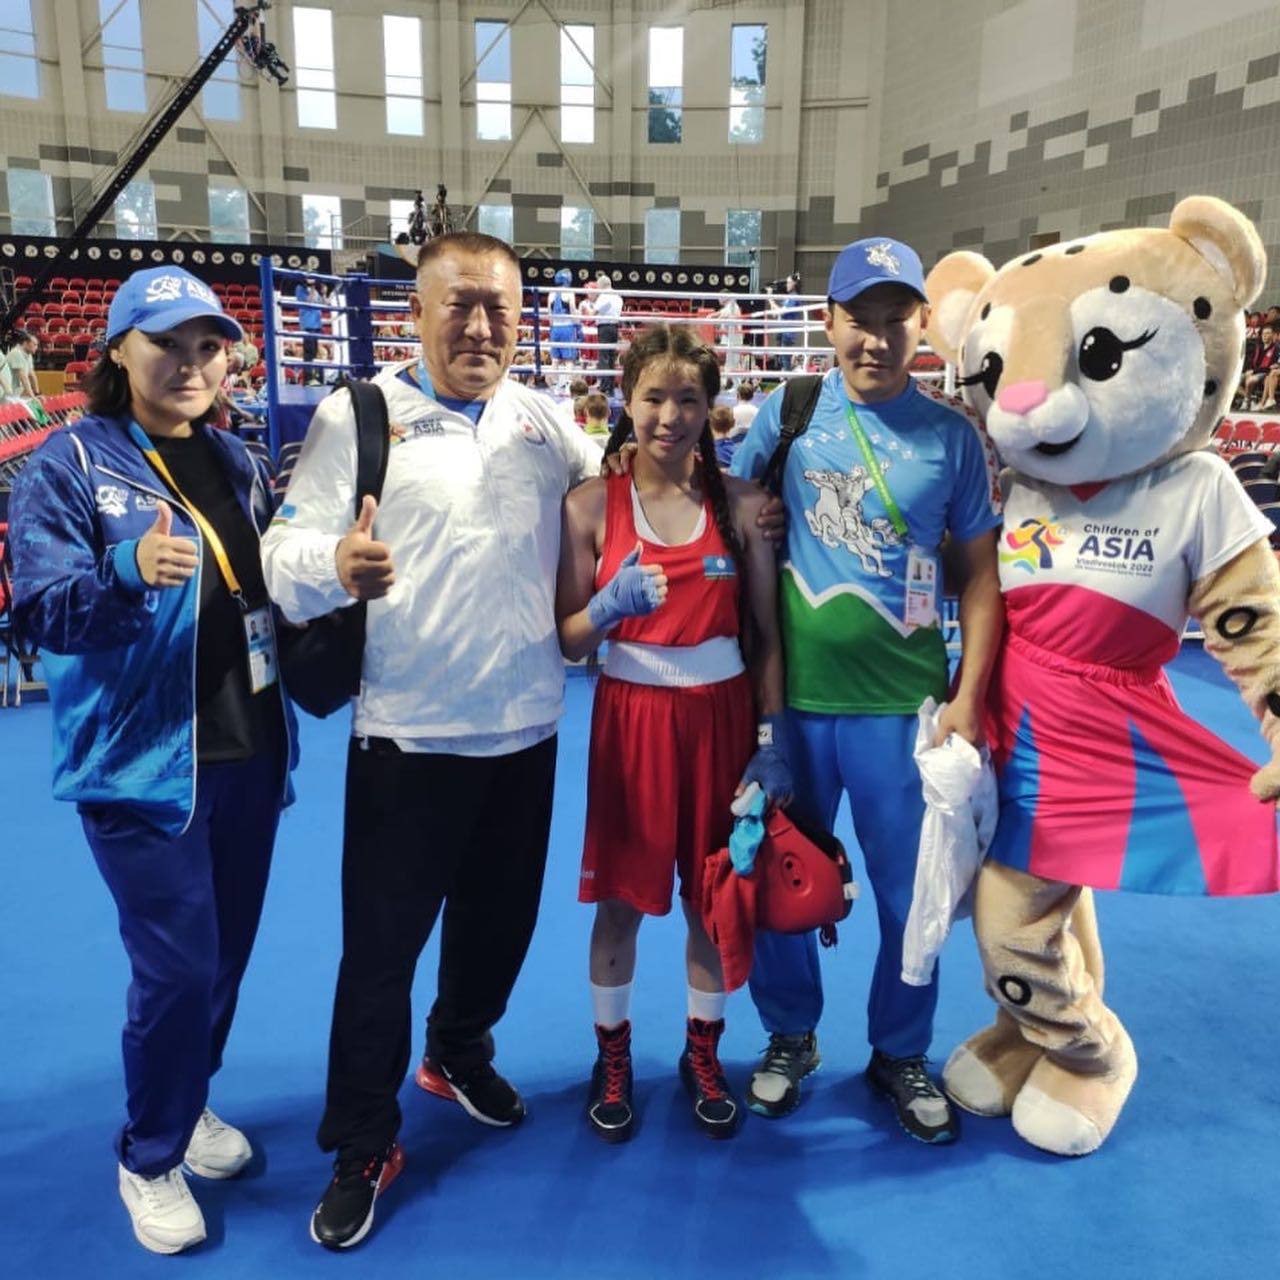 Якутянка Александра Слепцова взяла золото игр «Дети Азии» по боксу